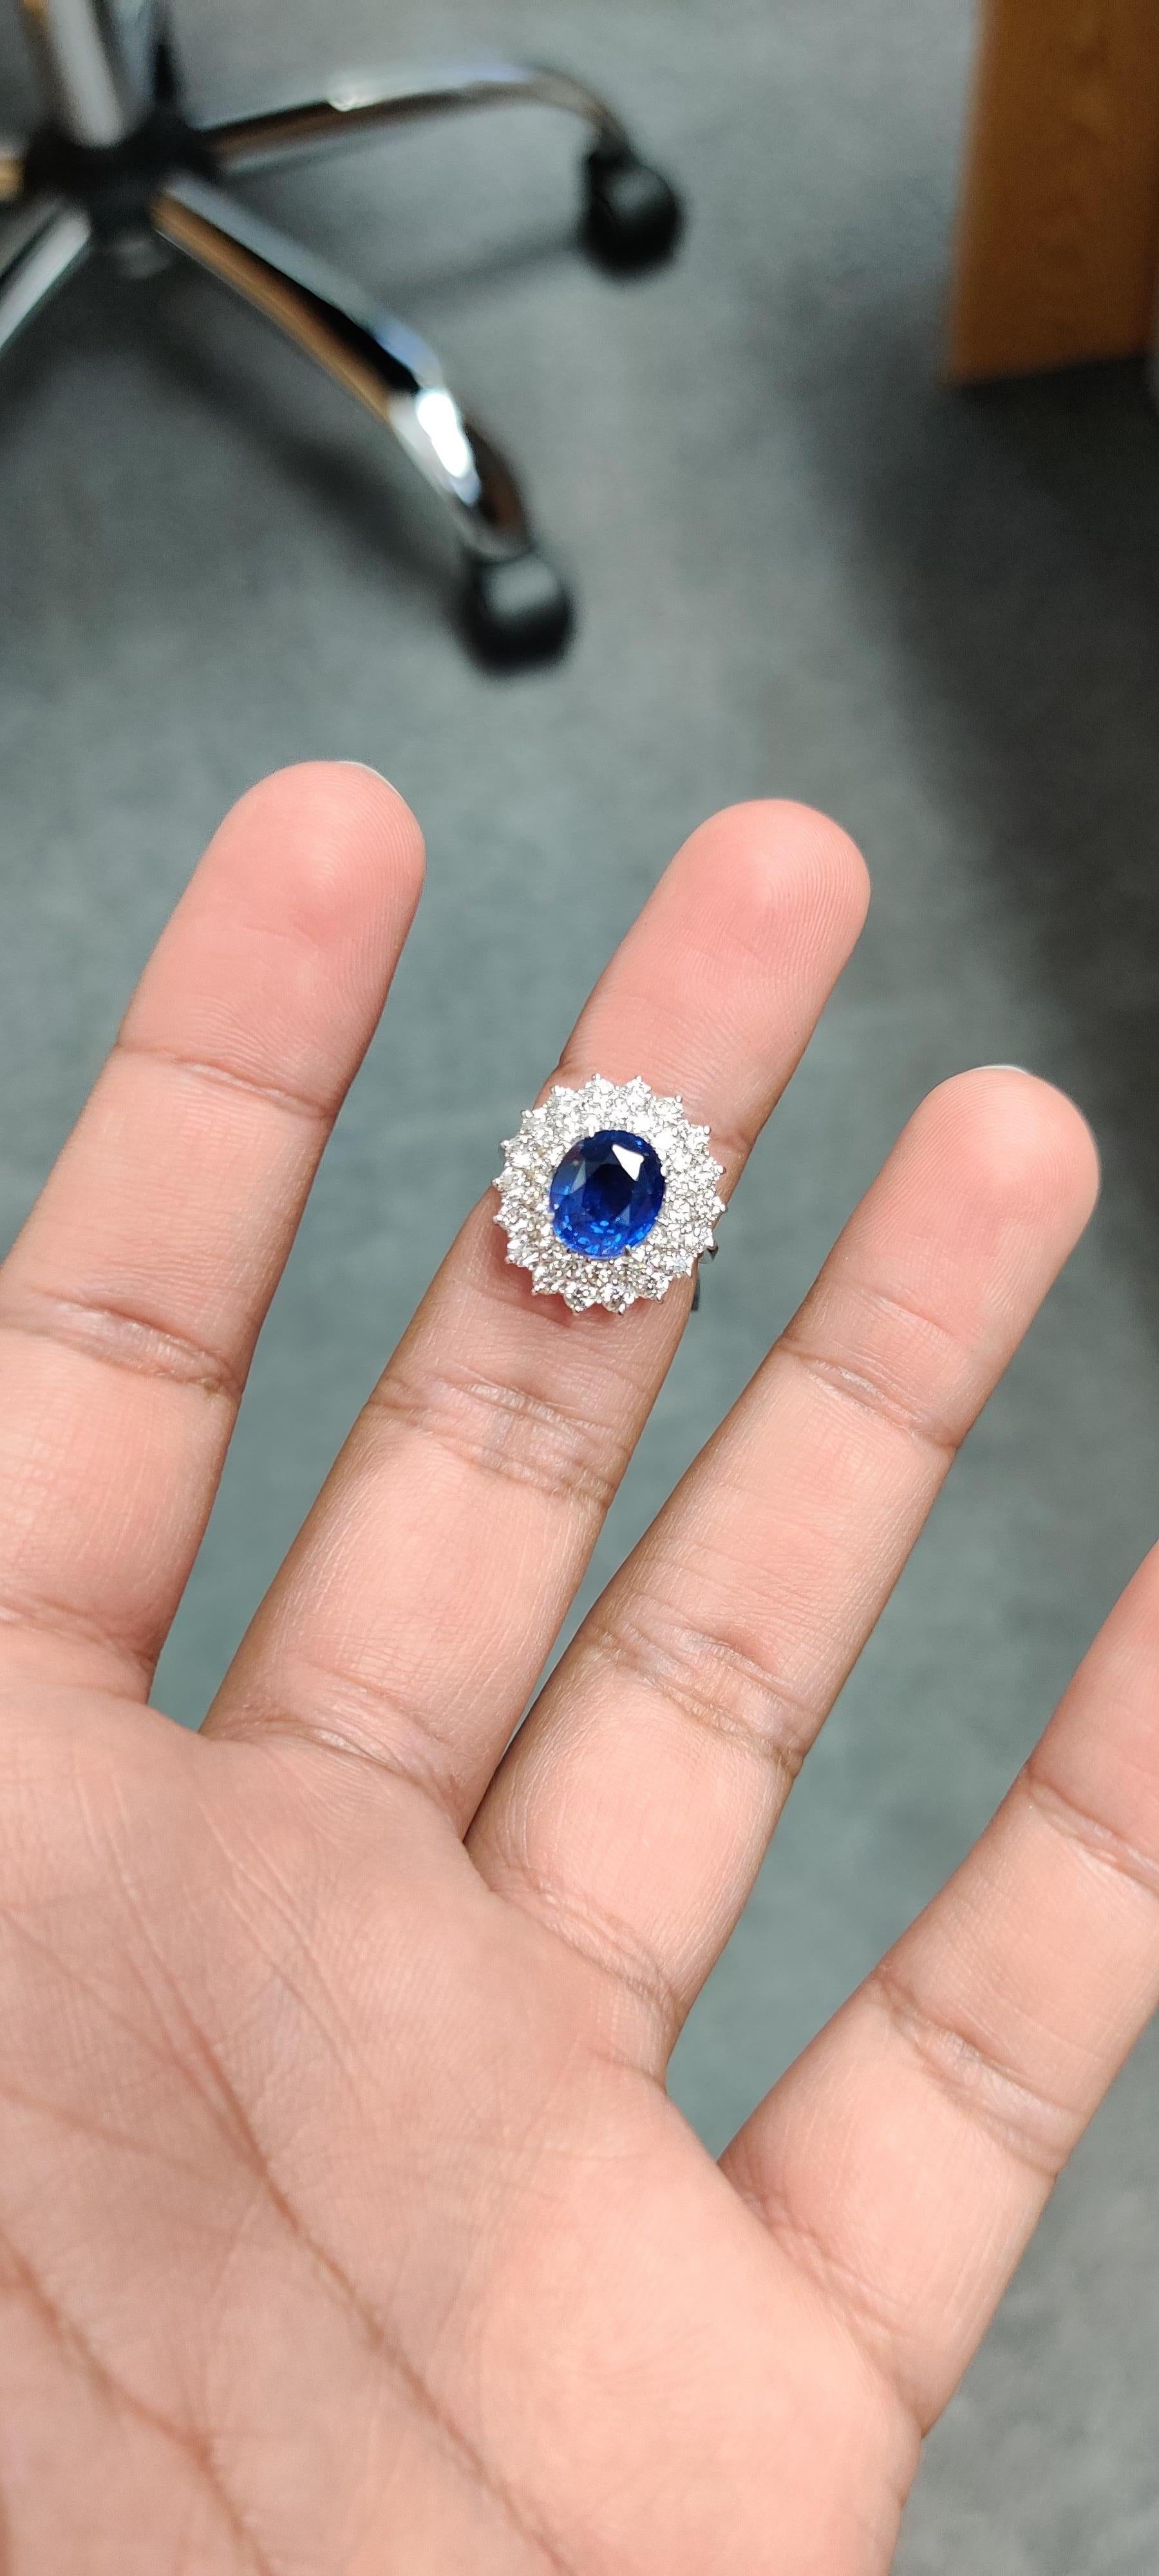 Oval Cut 3.74 Carat Sri Lanka Blue Sapphire Diamond Ring in 18K Gold